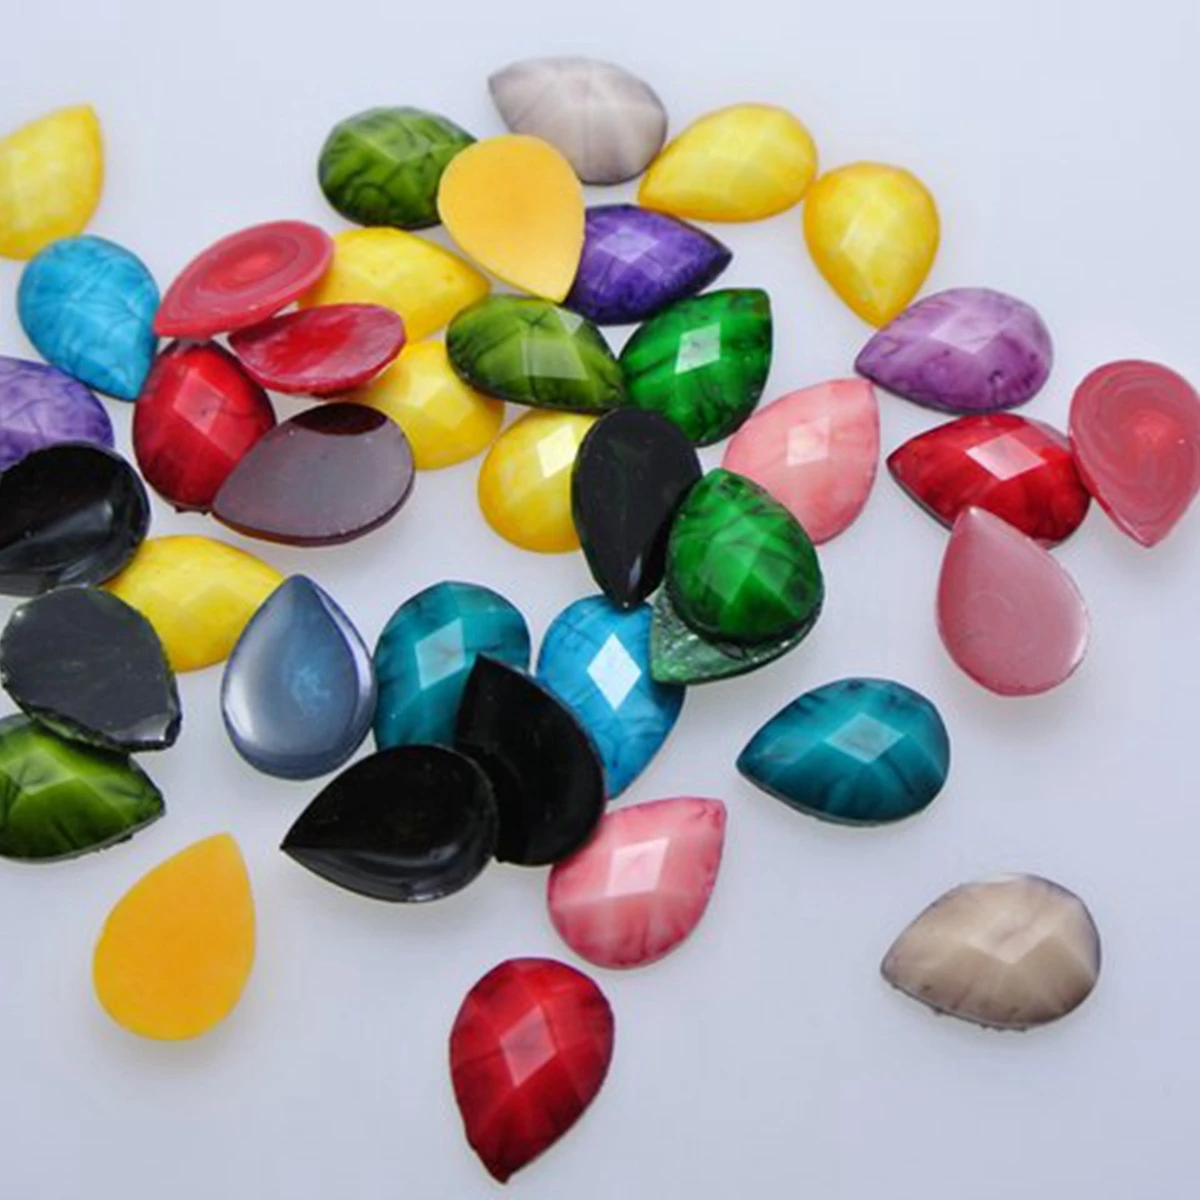 

100 Mixed Color Flatback Resin TearDrop Cabochon Gems 10X13mm Imitation Gemstone